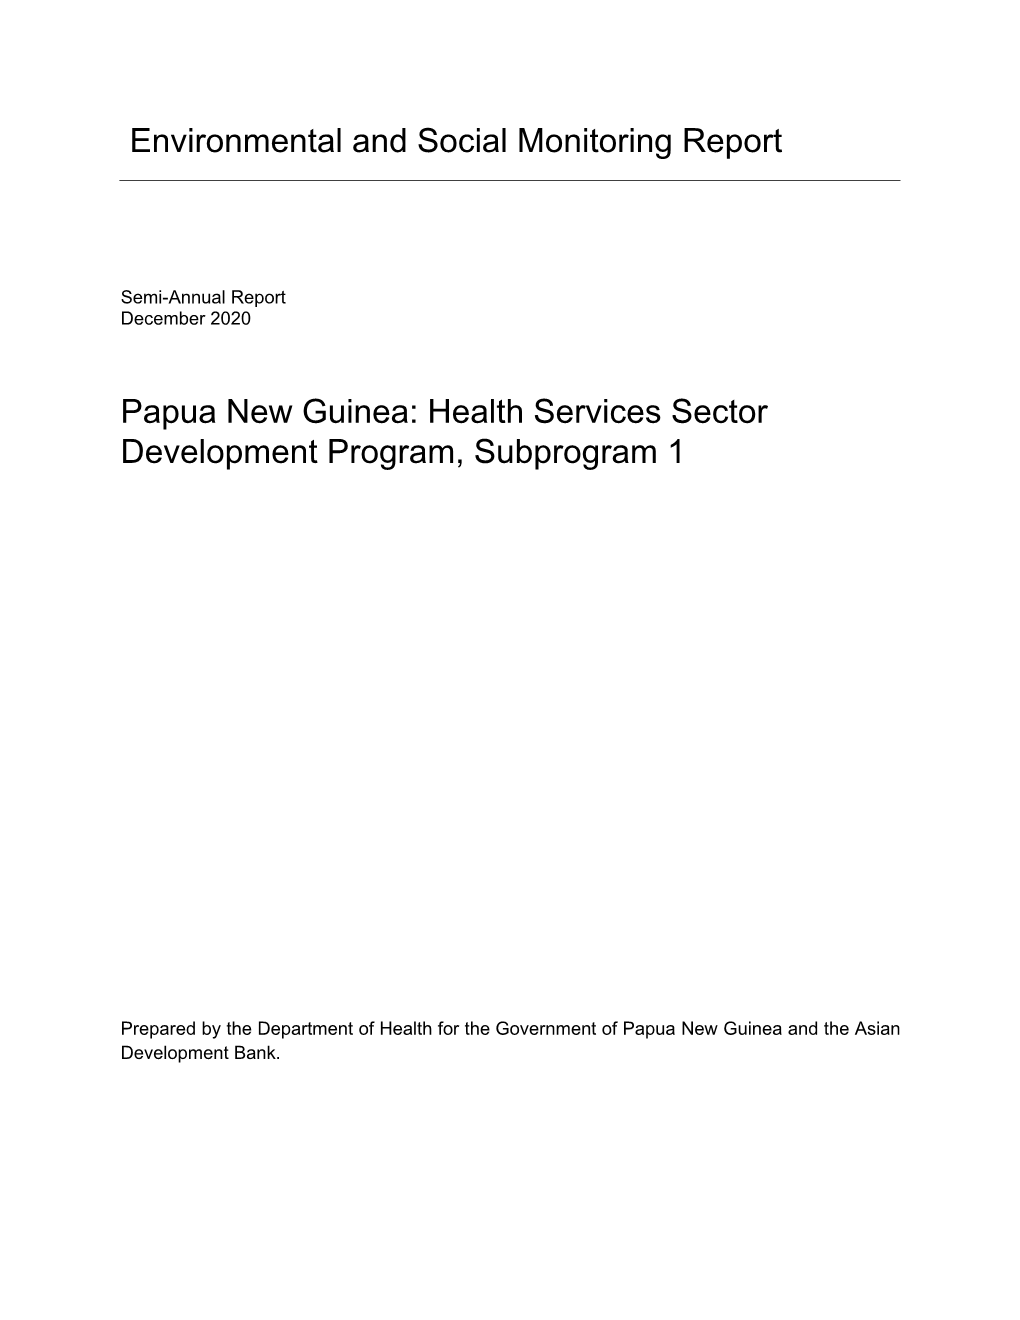 51035-001: Health Services Sector Development Program, Subprogram 1